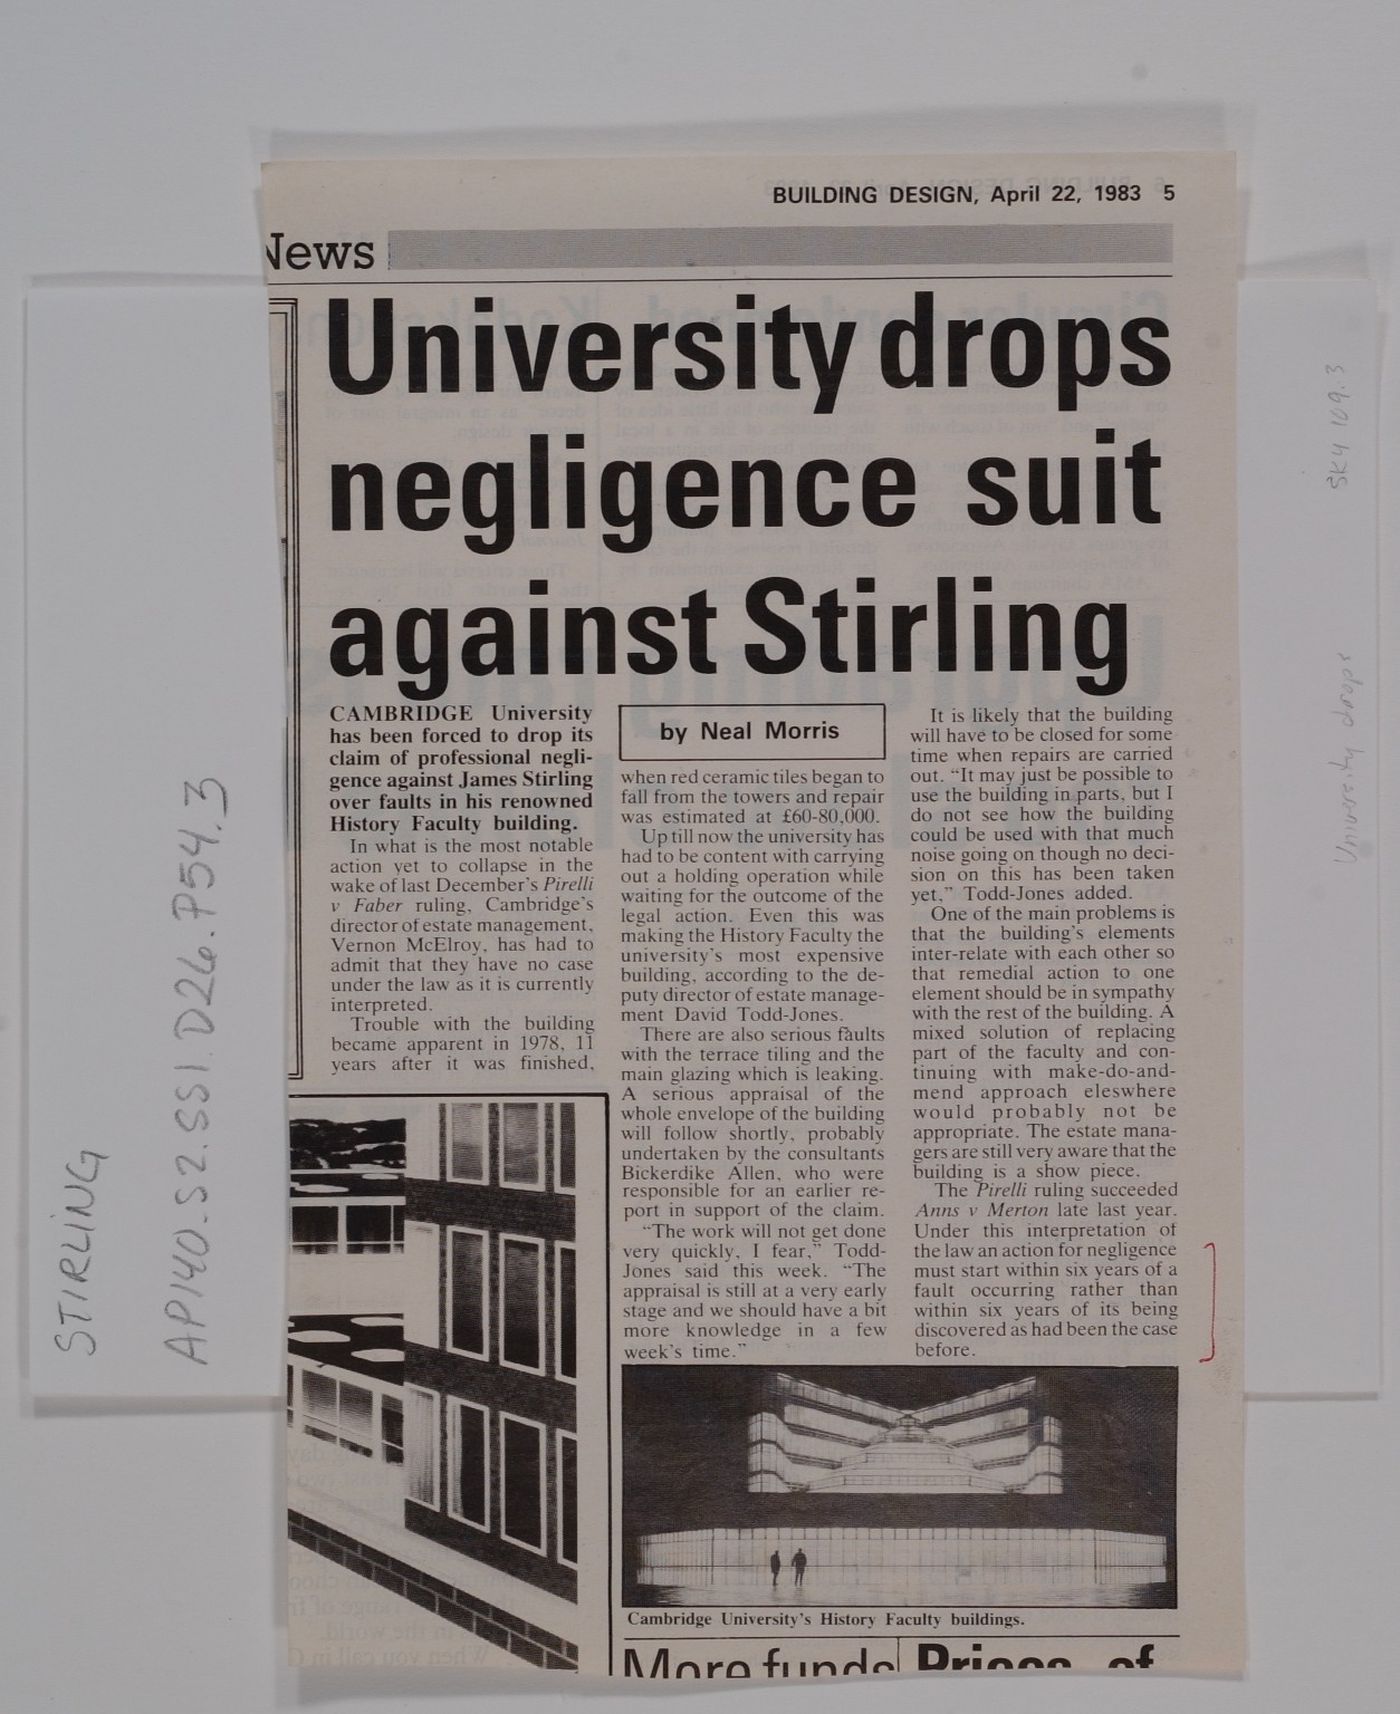 University drops negligence suit against Stirling